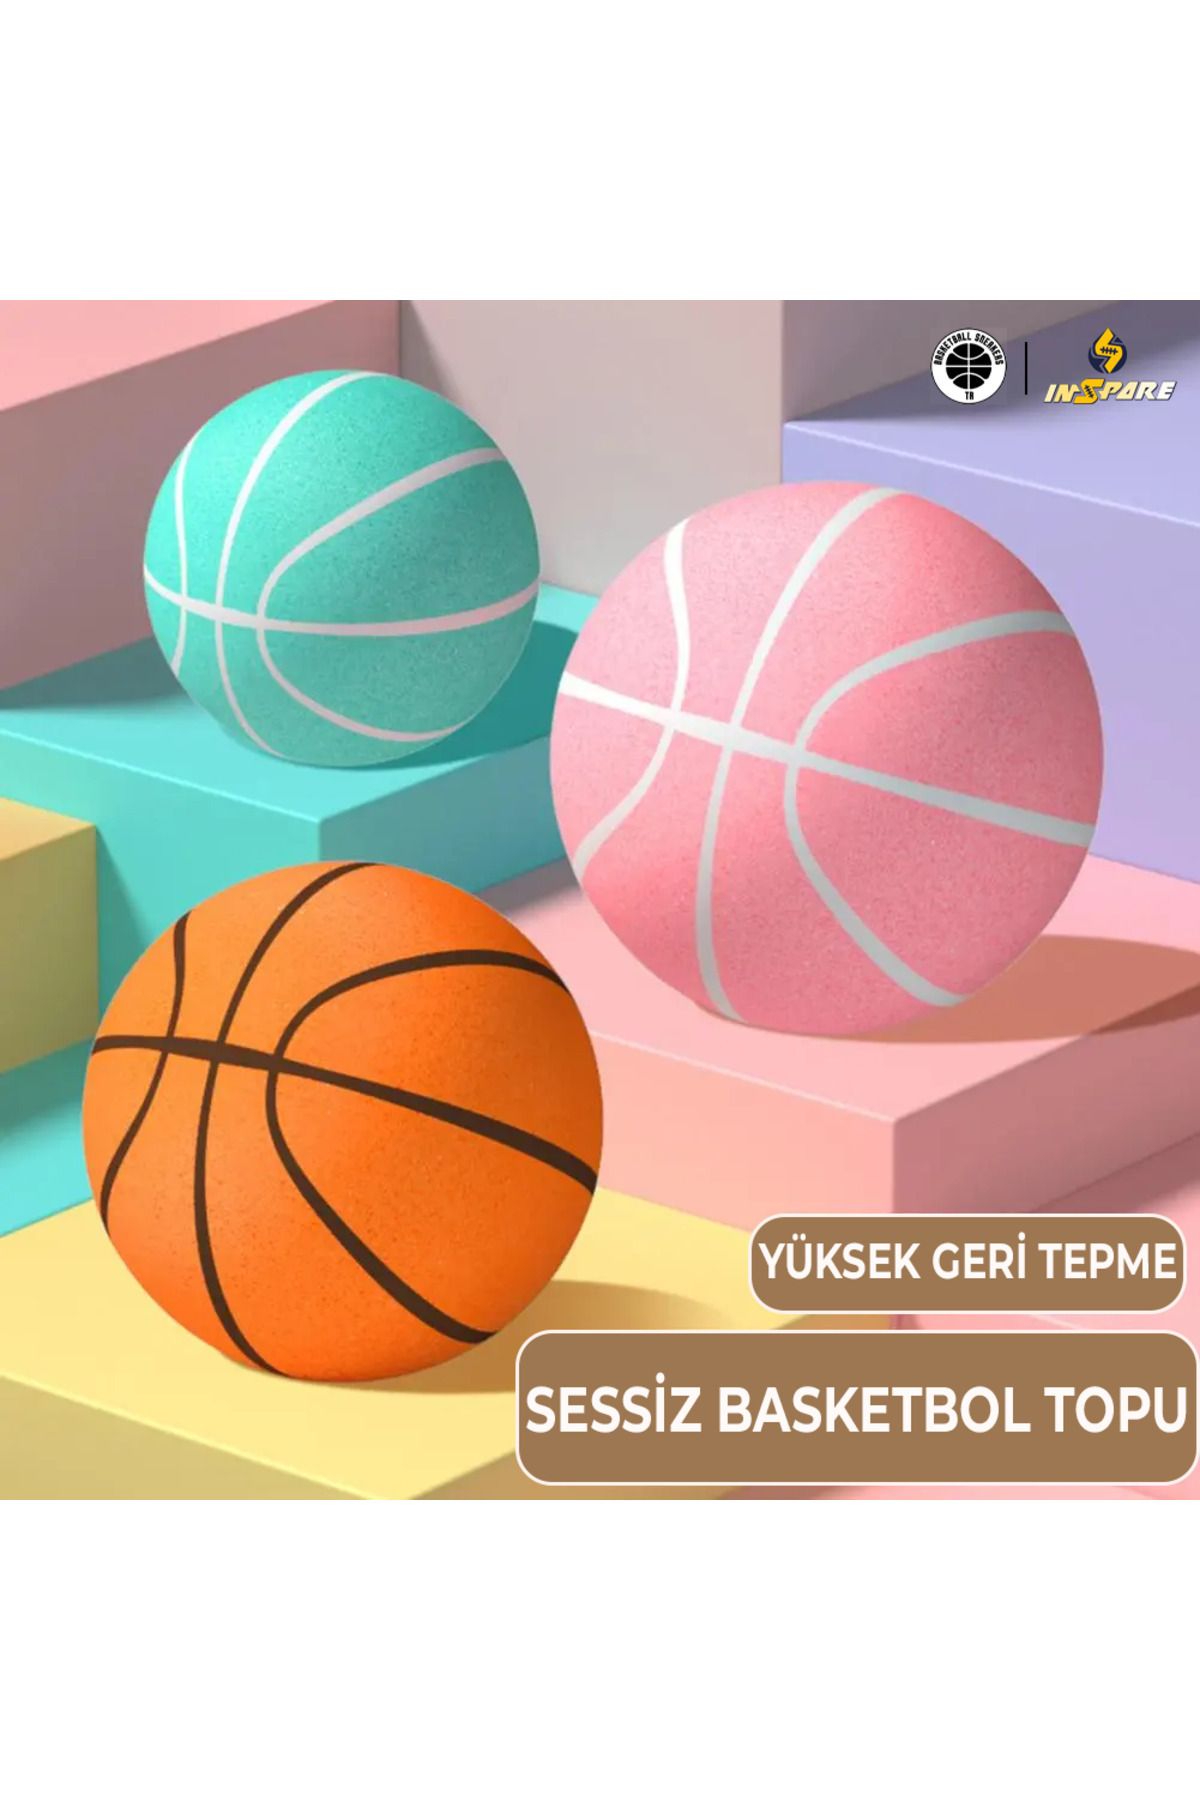 Inspare Sessiz Basketbol Topu